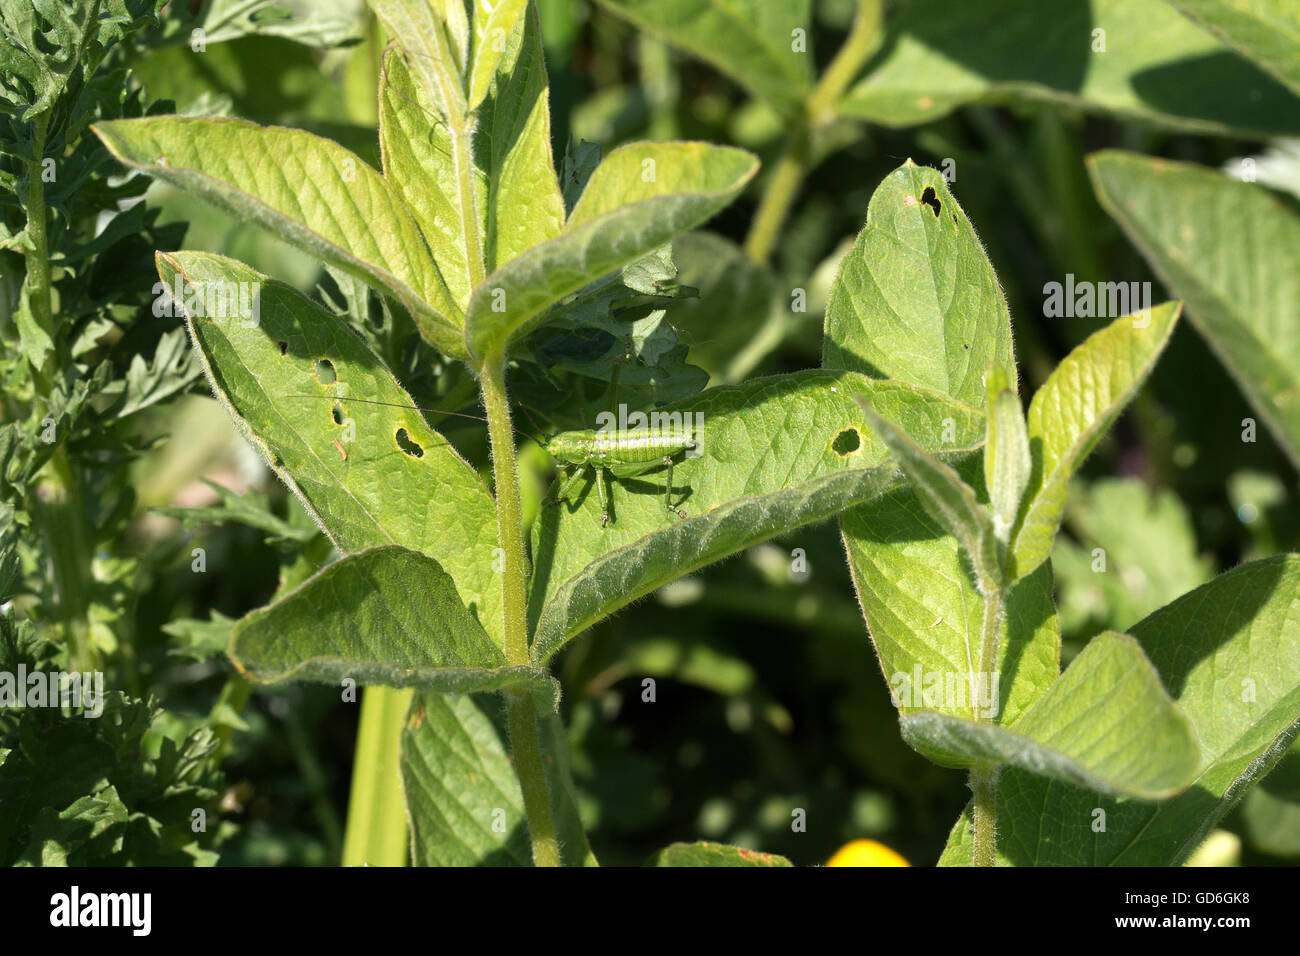 Punktierte Zartschrecke auf einen Pflanzenblatt moteado de cricket de Bush en una hoja de planta Foto de stock